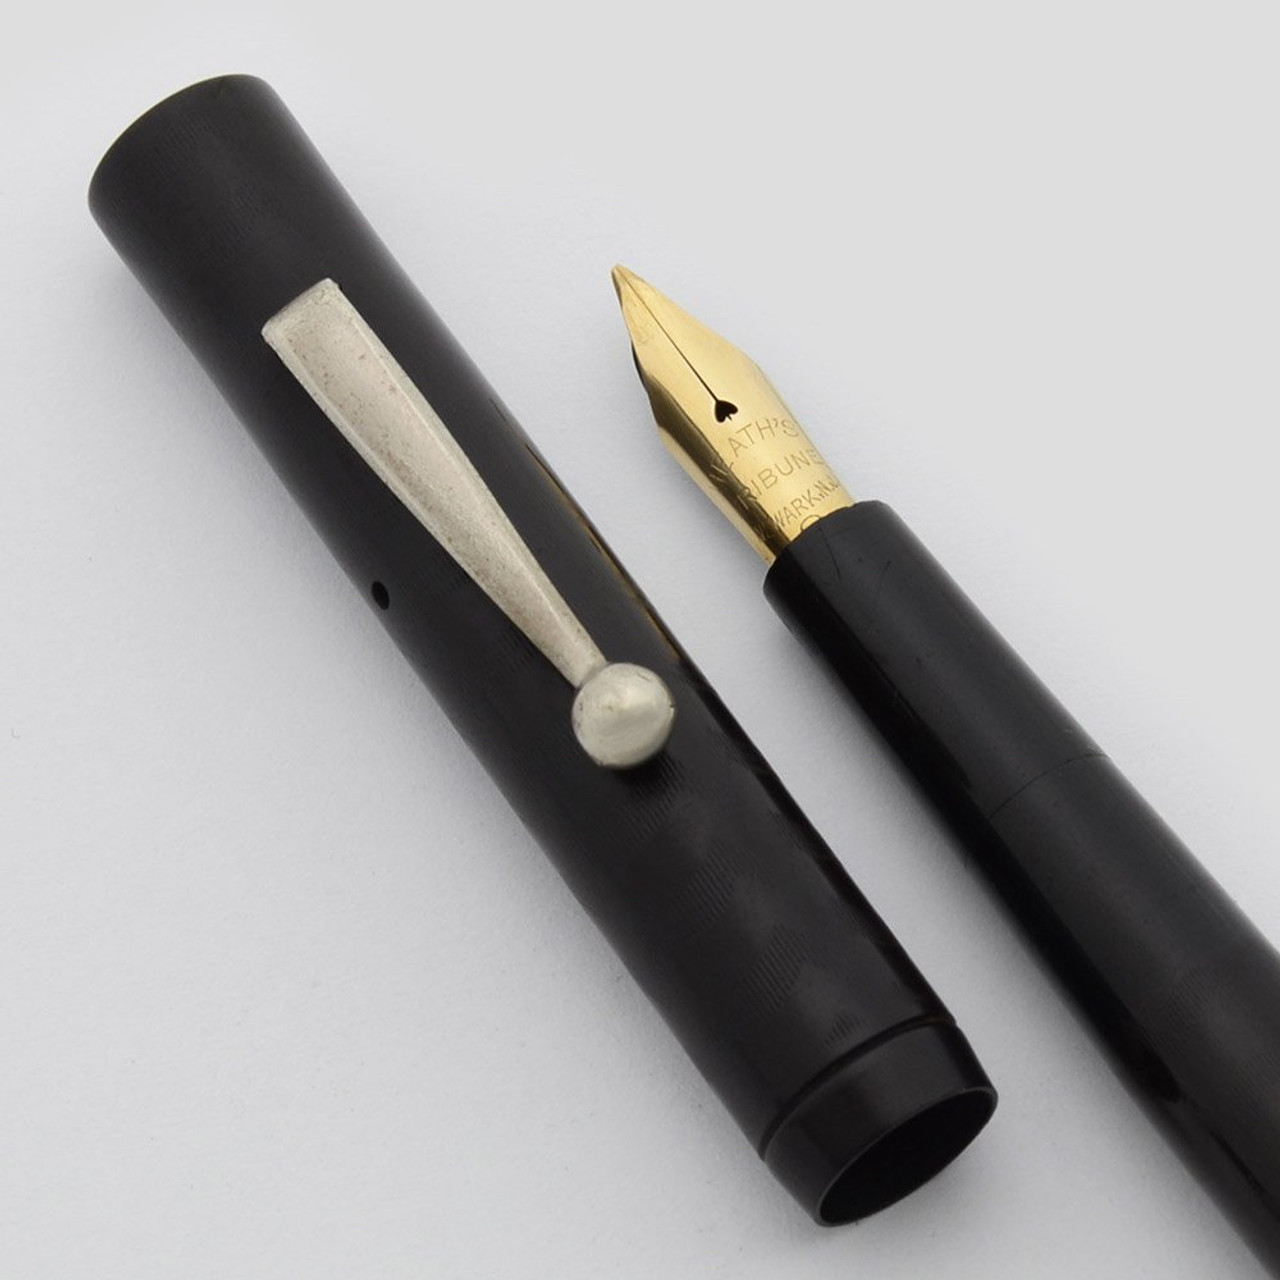 Heath's Tribune Fountain Pen - BCHR, Eyedropper, Full Flex Fine Nib (Excellent +, Restored)